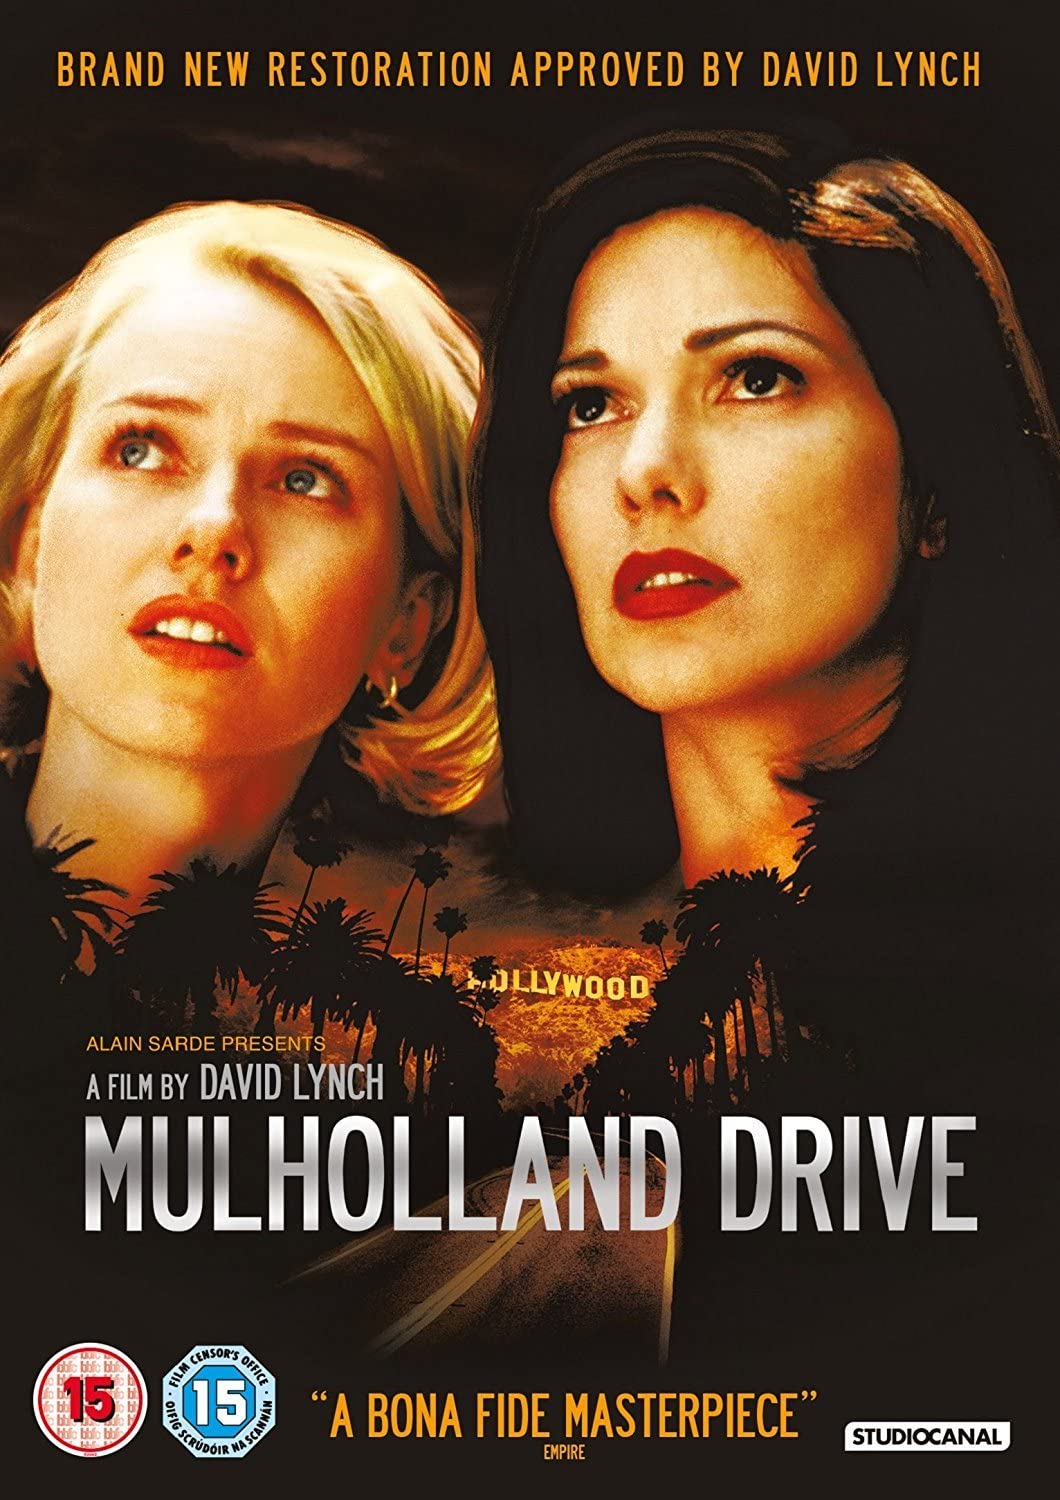 Mulholland Drive tally Restored) [1999] - Mystery/Thriller [DVD]